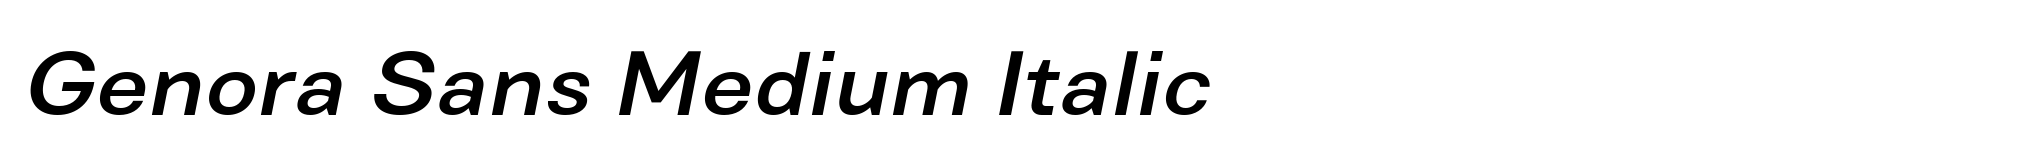 Genora Sans Medium Italic image